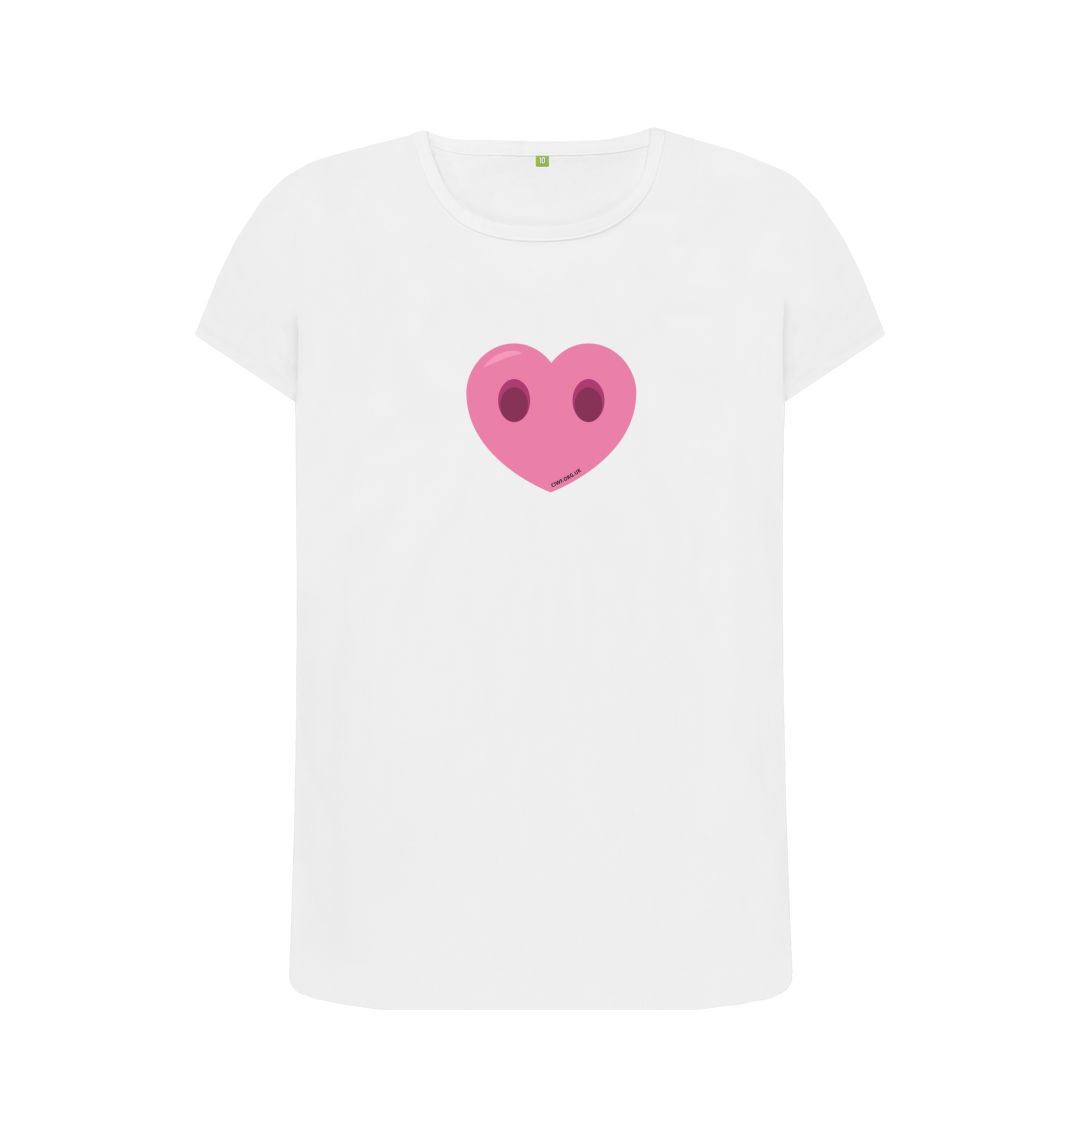 White Women's Compassion Heart T-Shirt